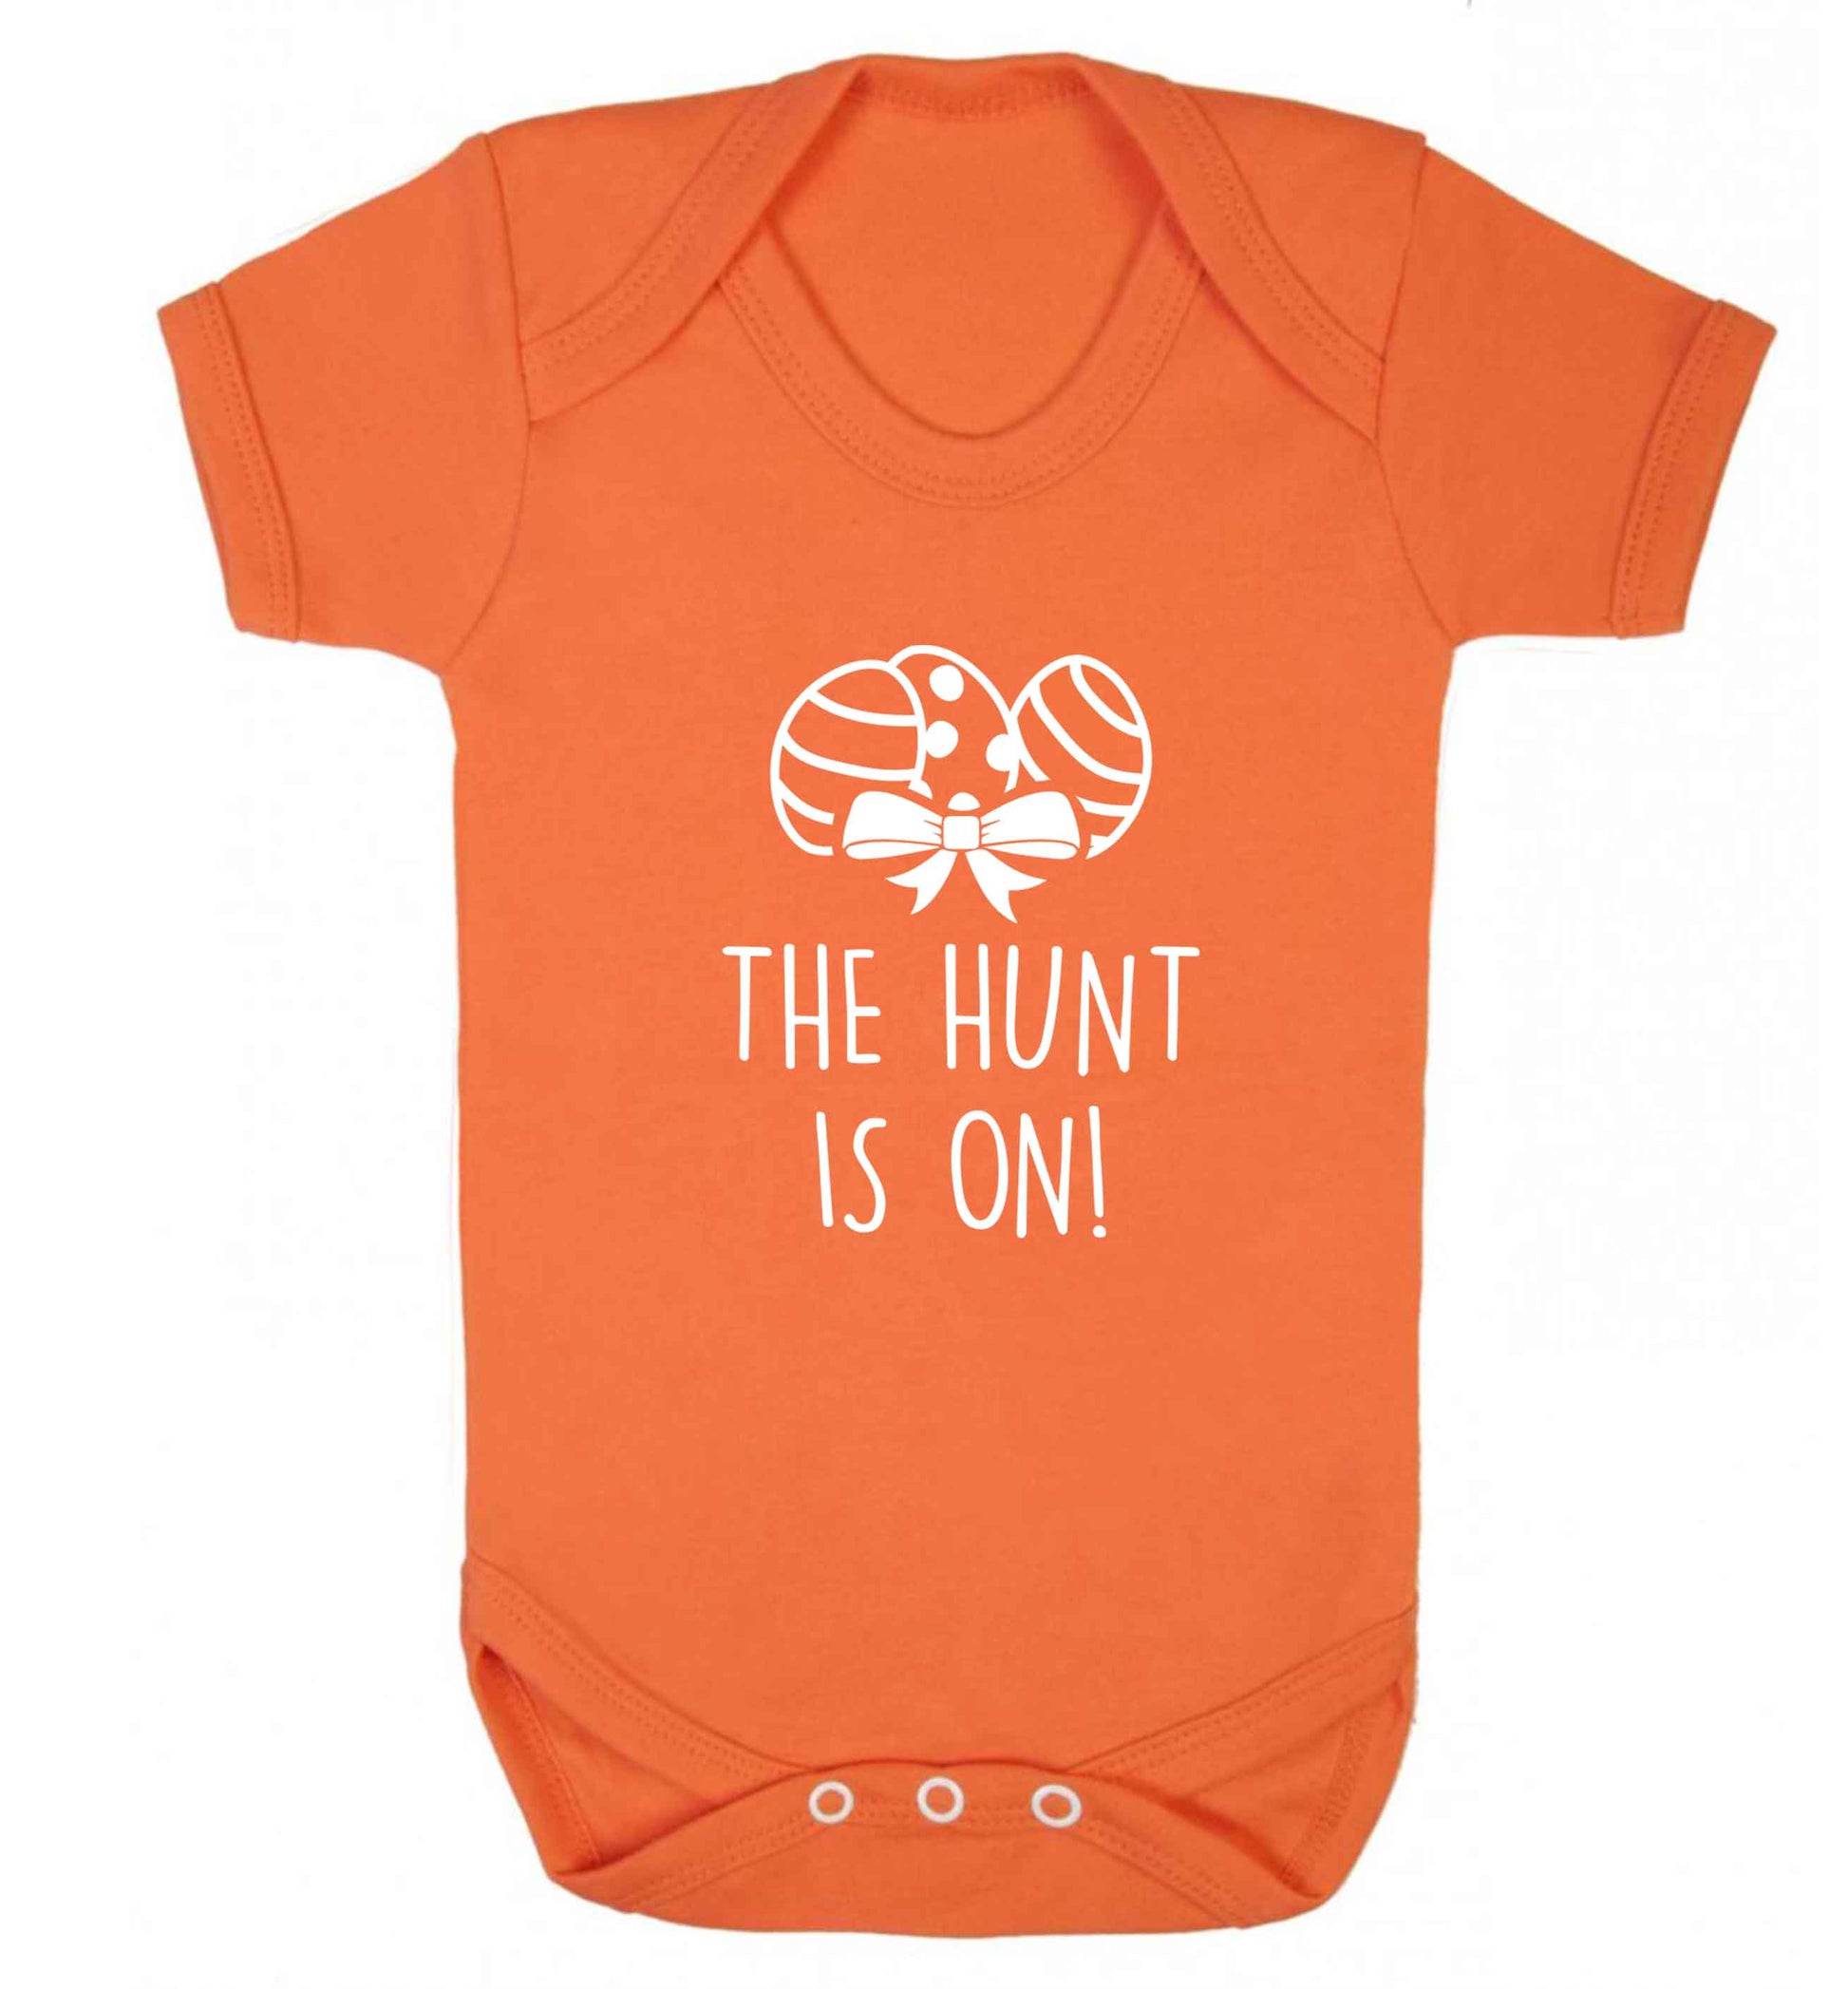 The hunt is on baby vest orange 18-24 months